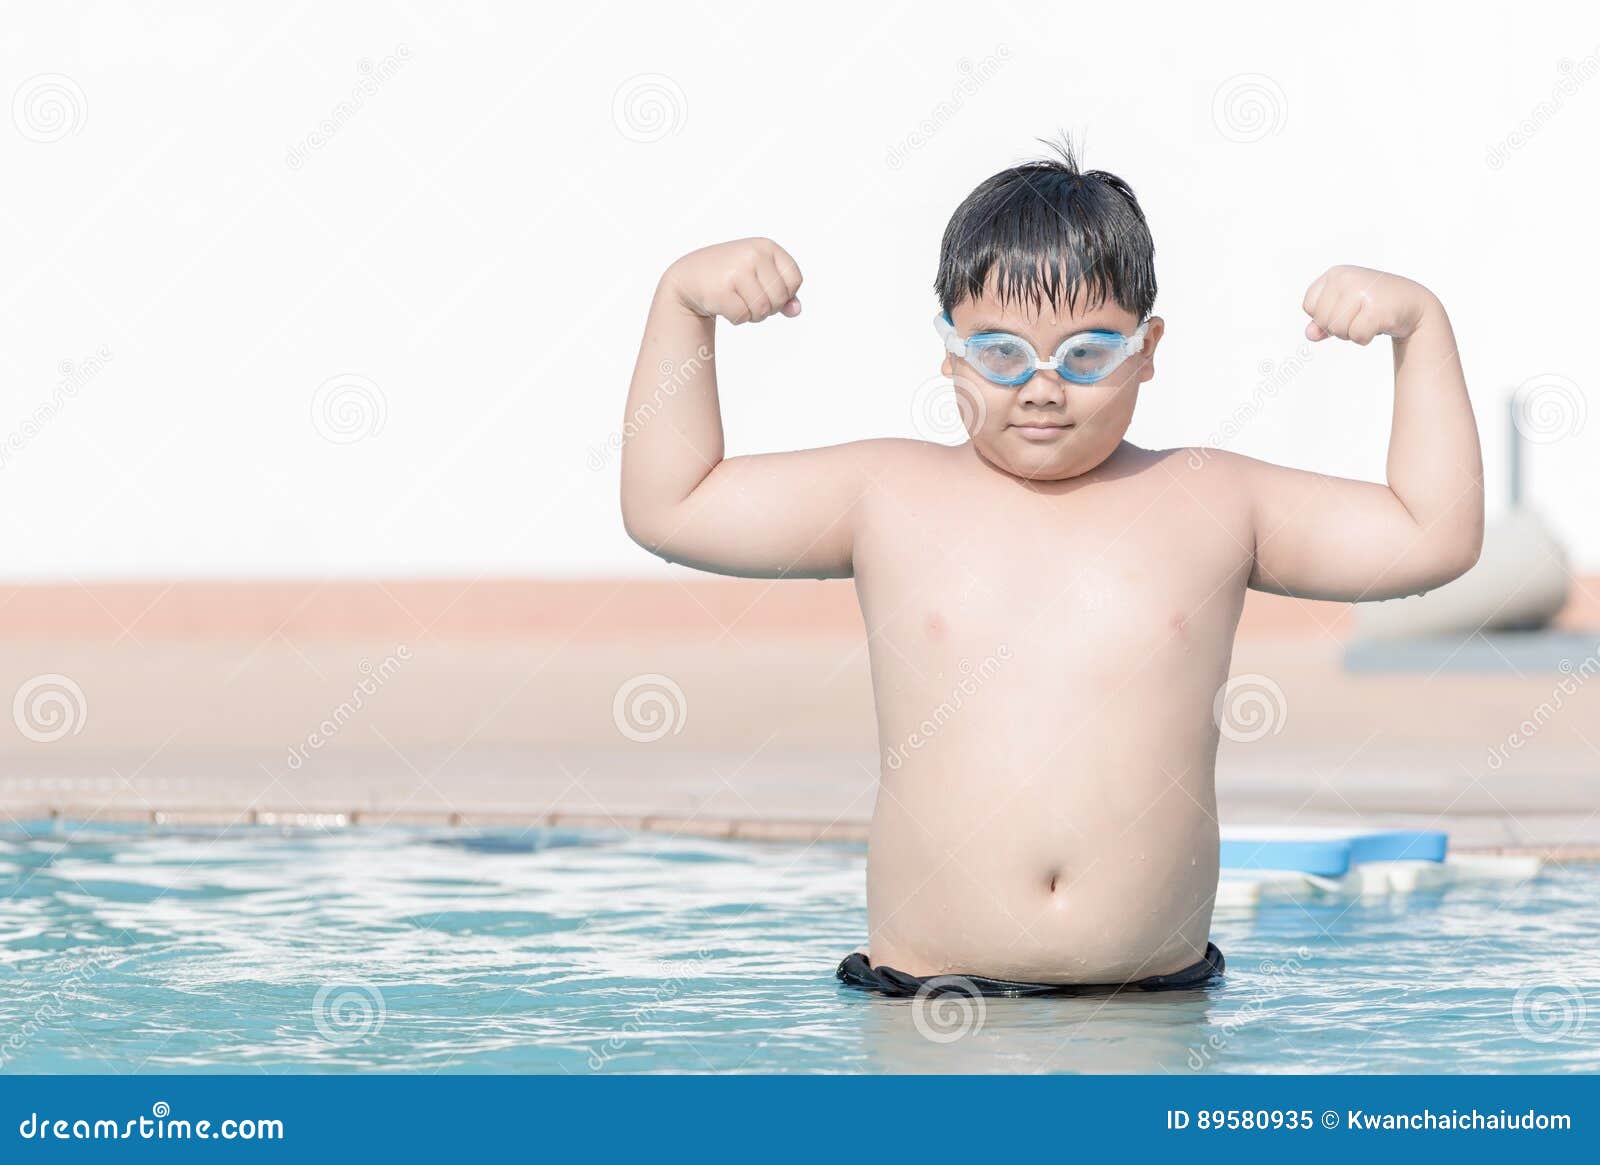 Мальчик трусы бассейн. Чубби бойс. Толстый ребенок в бассейне.